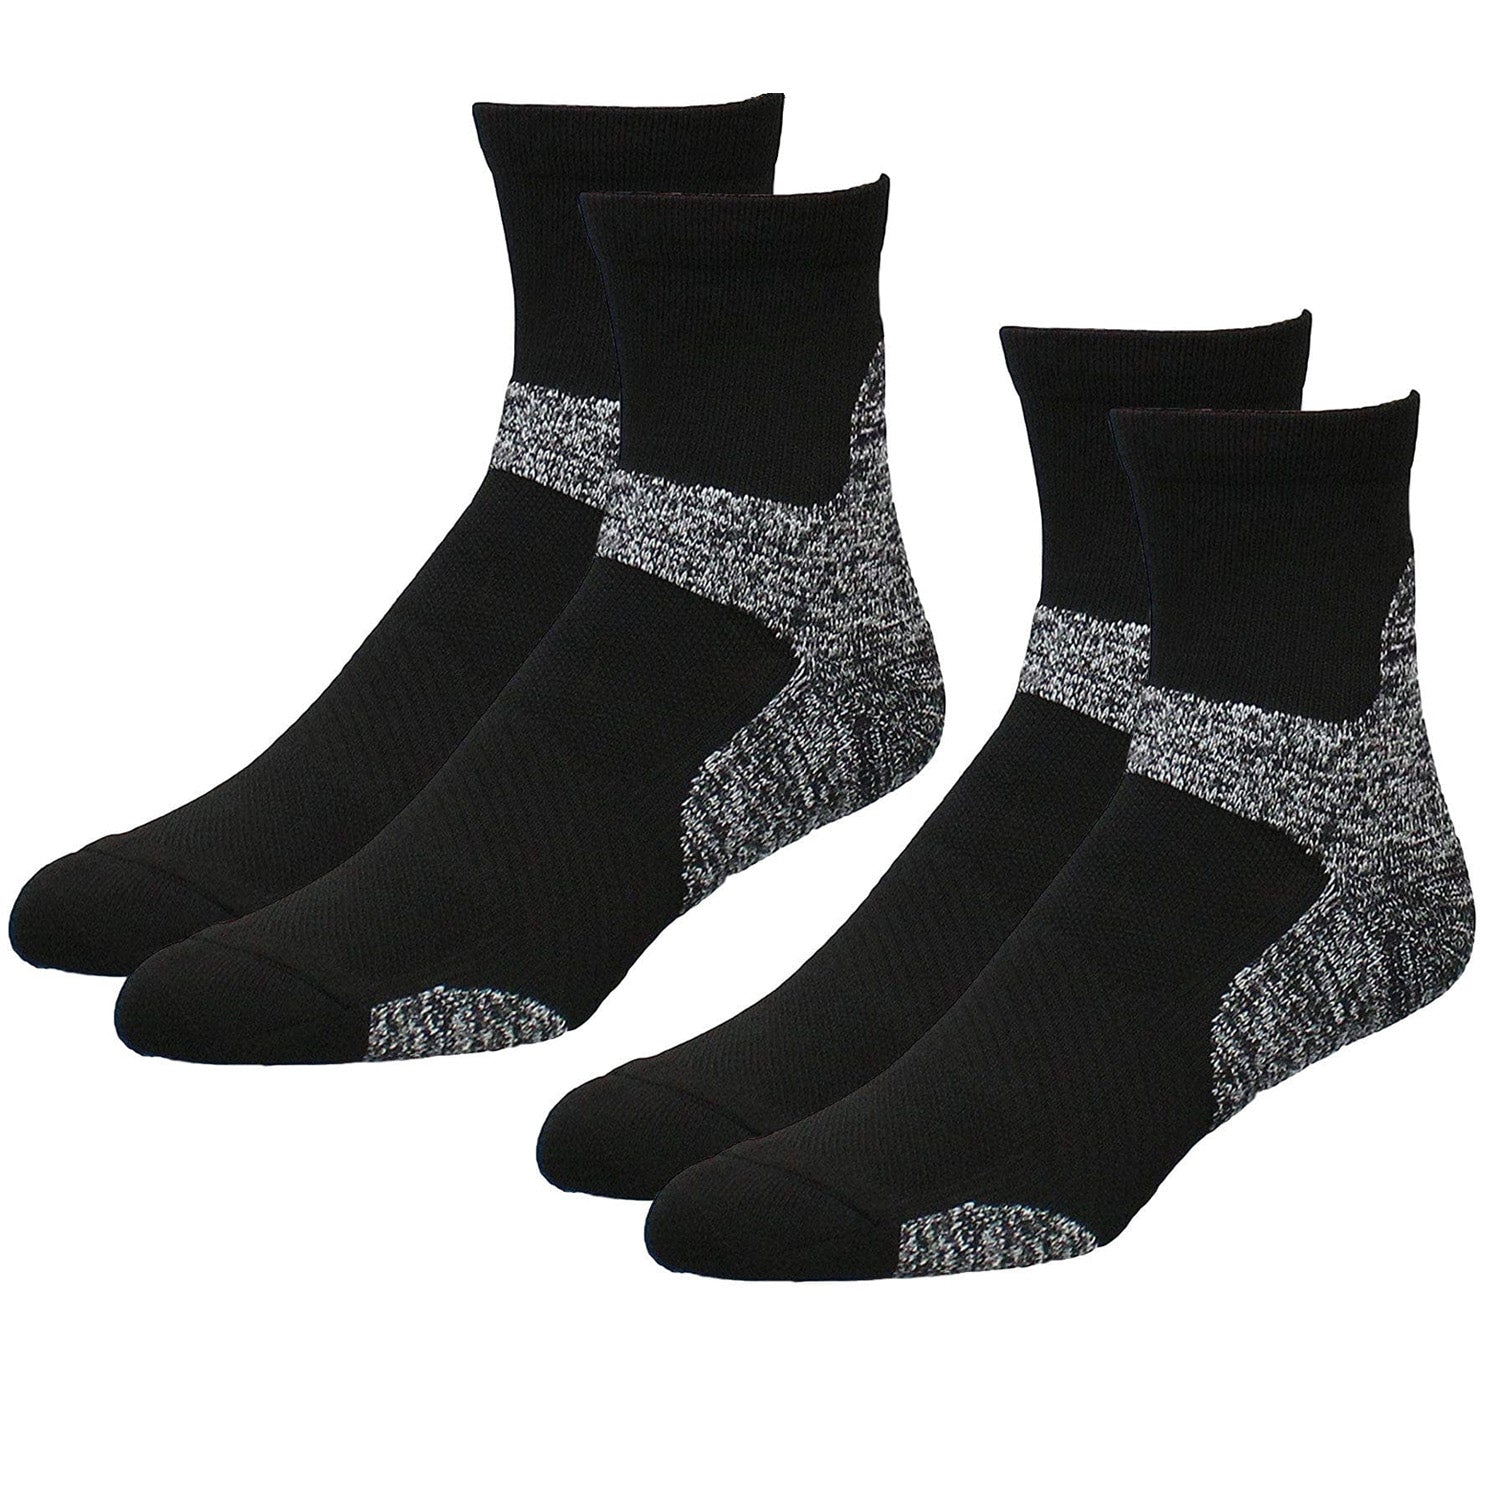 black and grey padded running socks